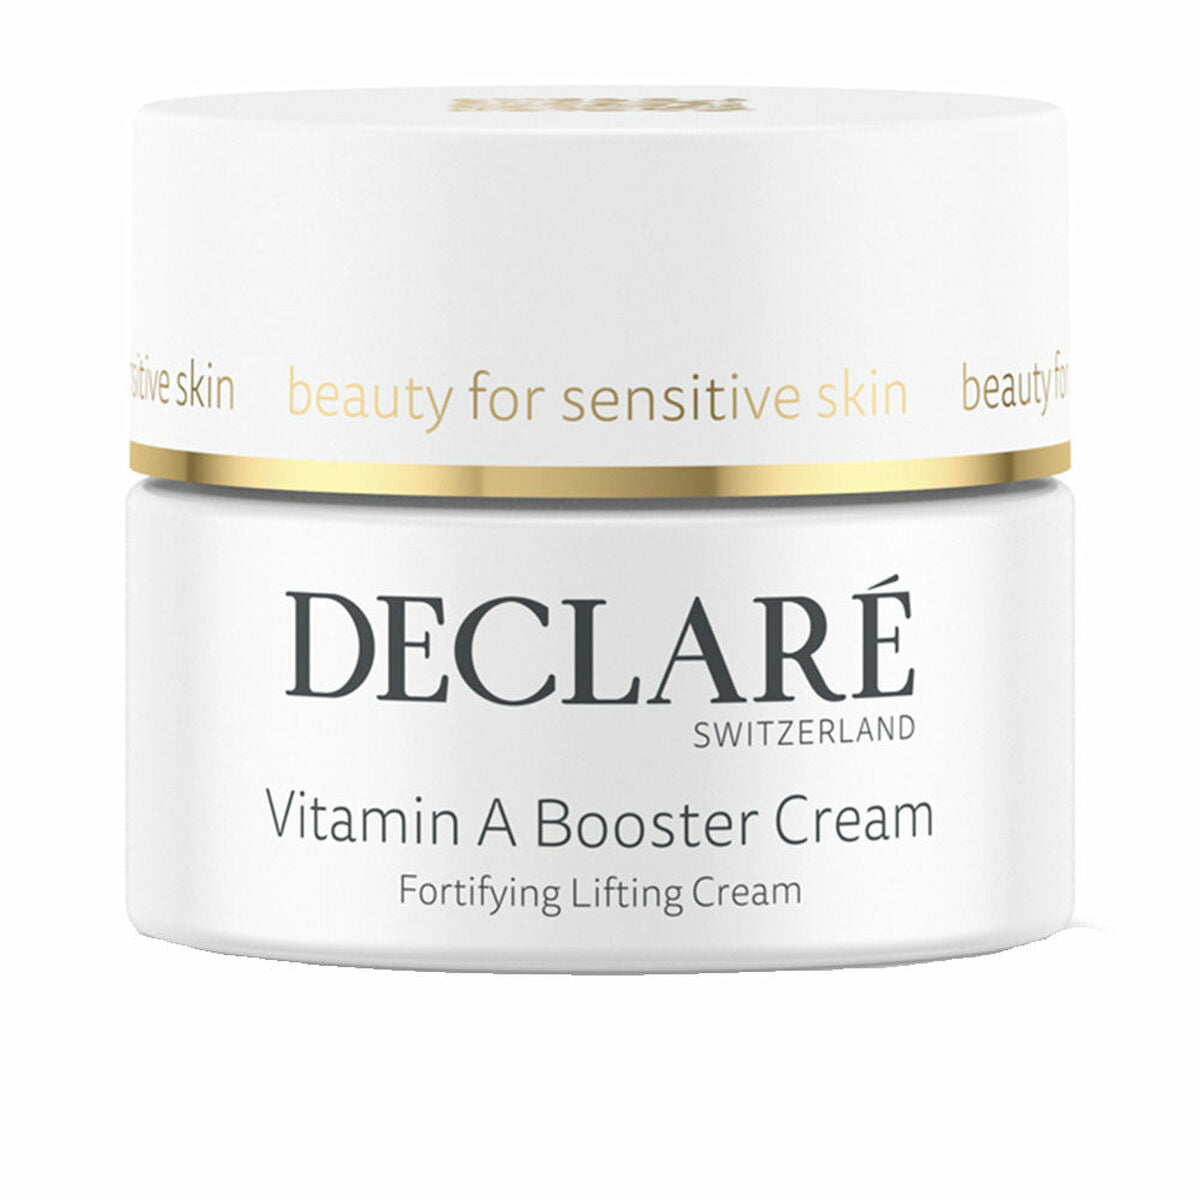 Crème hydratante Declaré Vitamin A Booster 50 ml